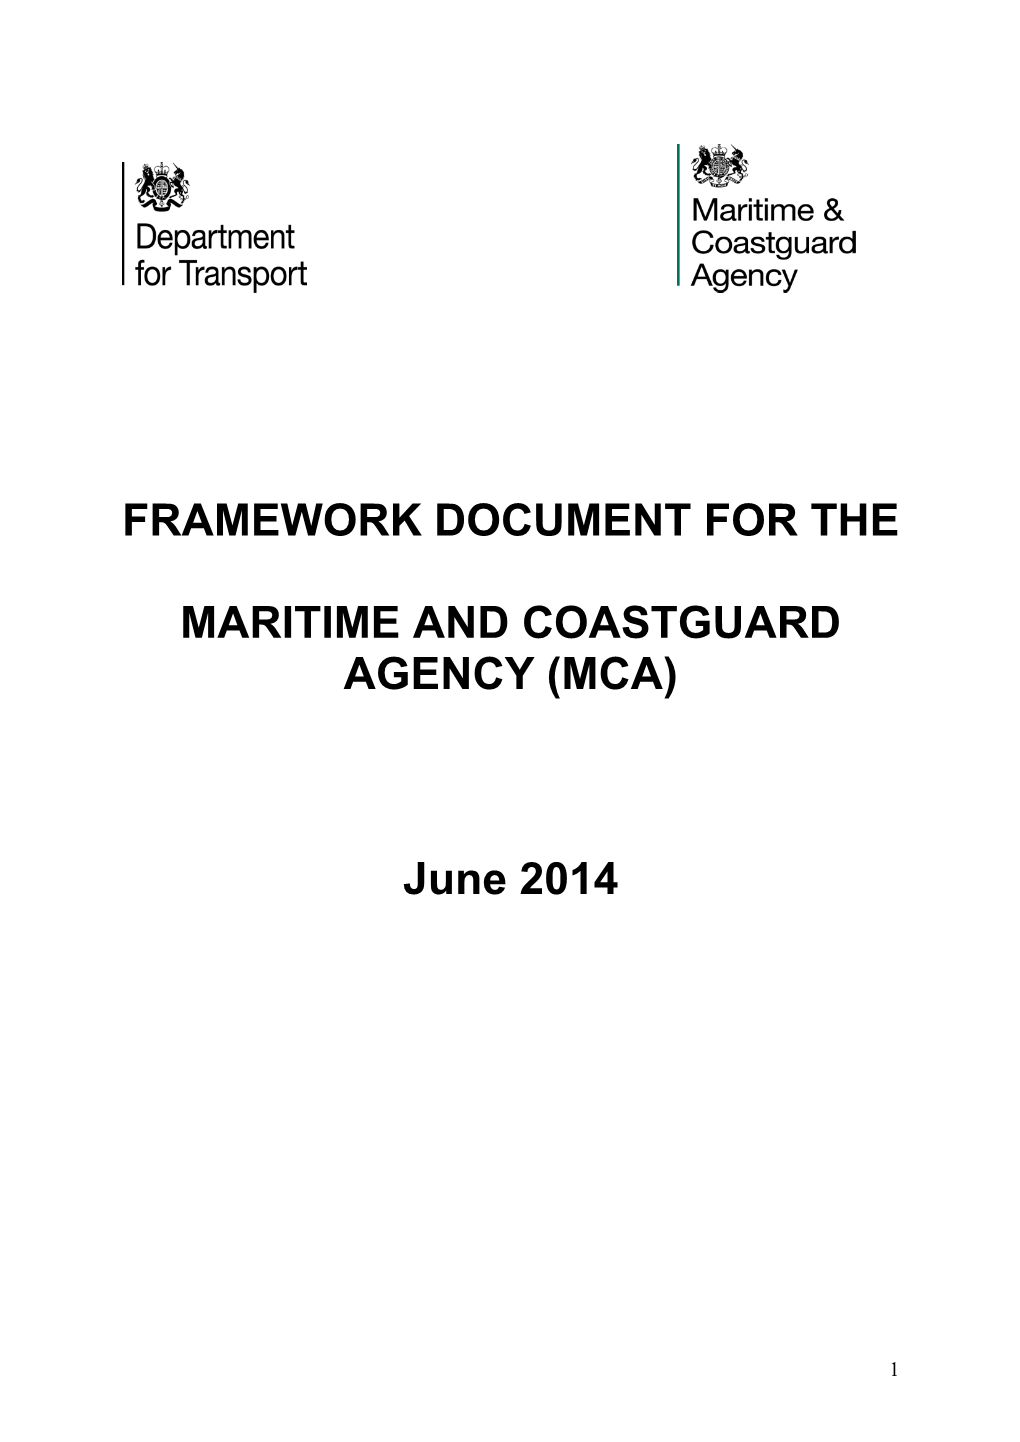 MCA Framework Document